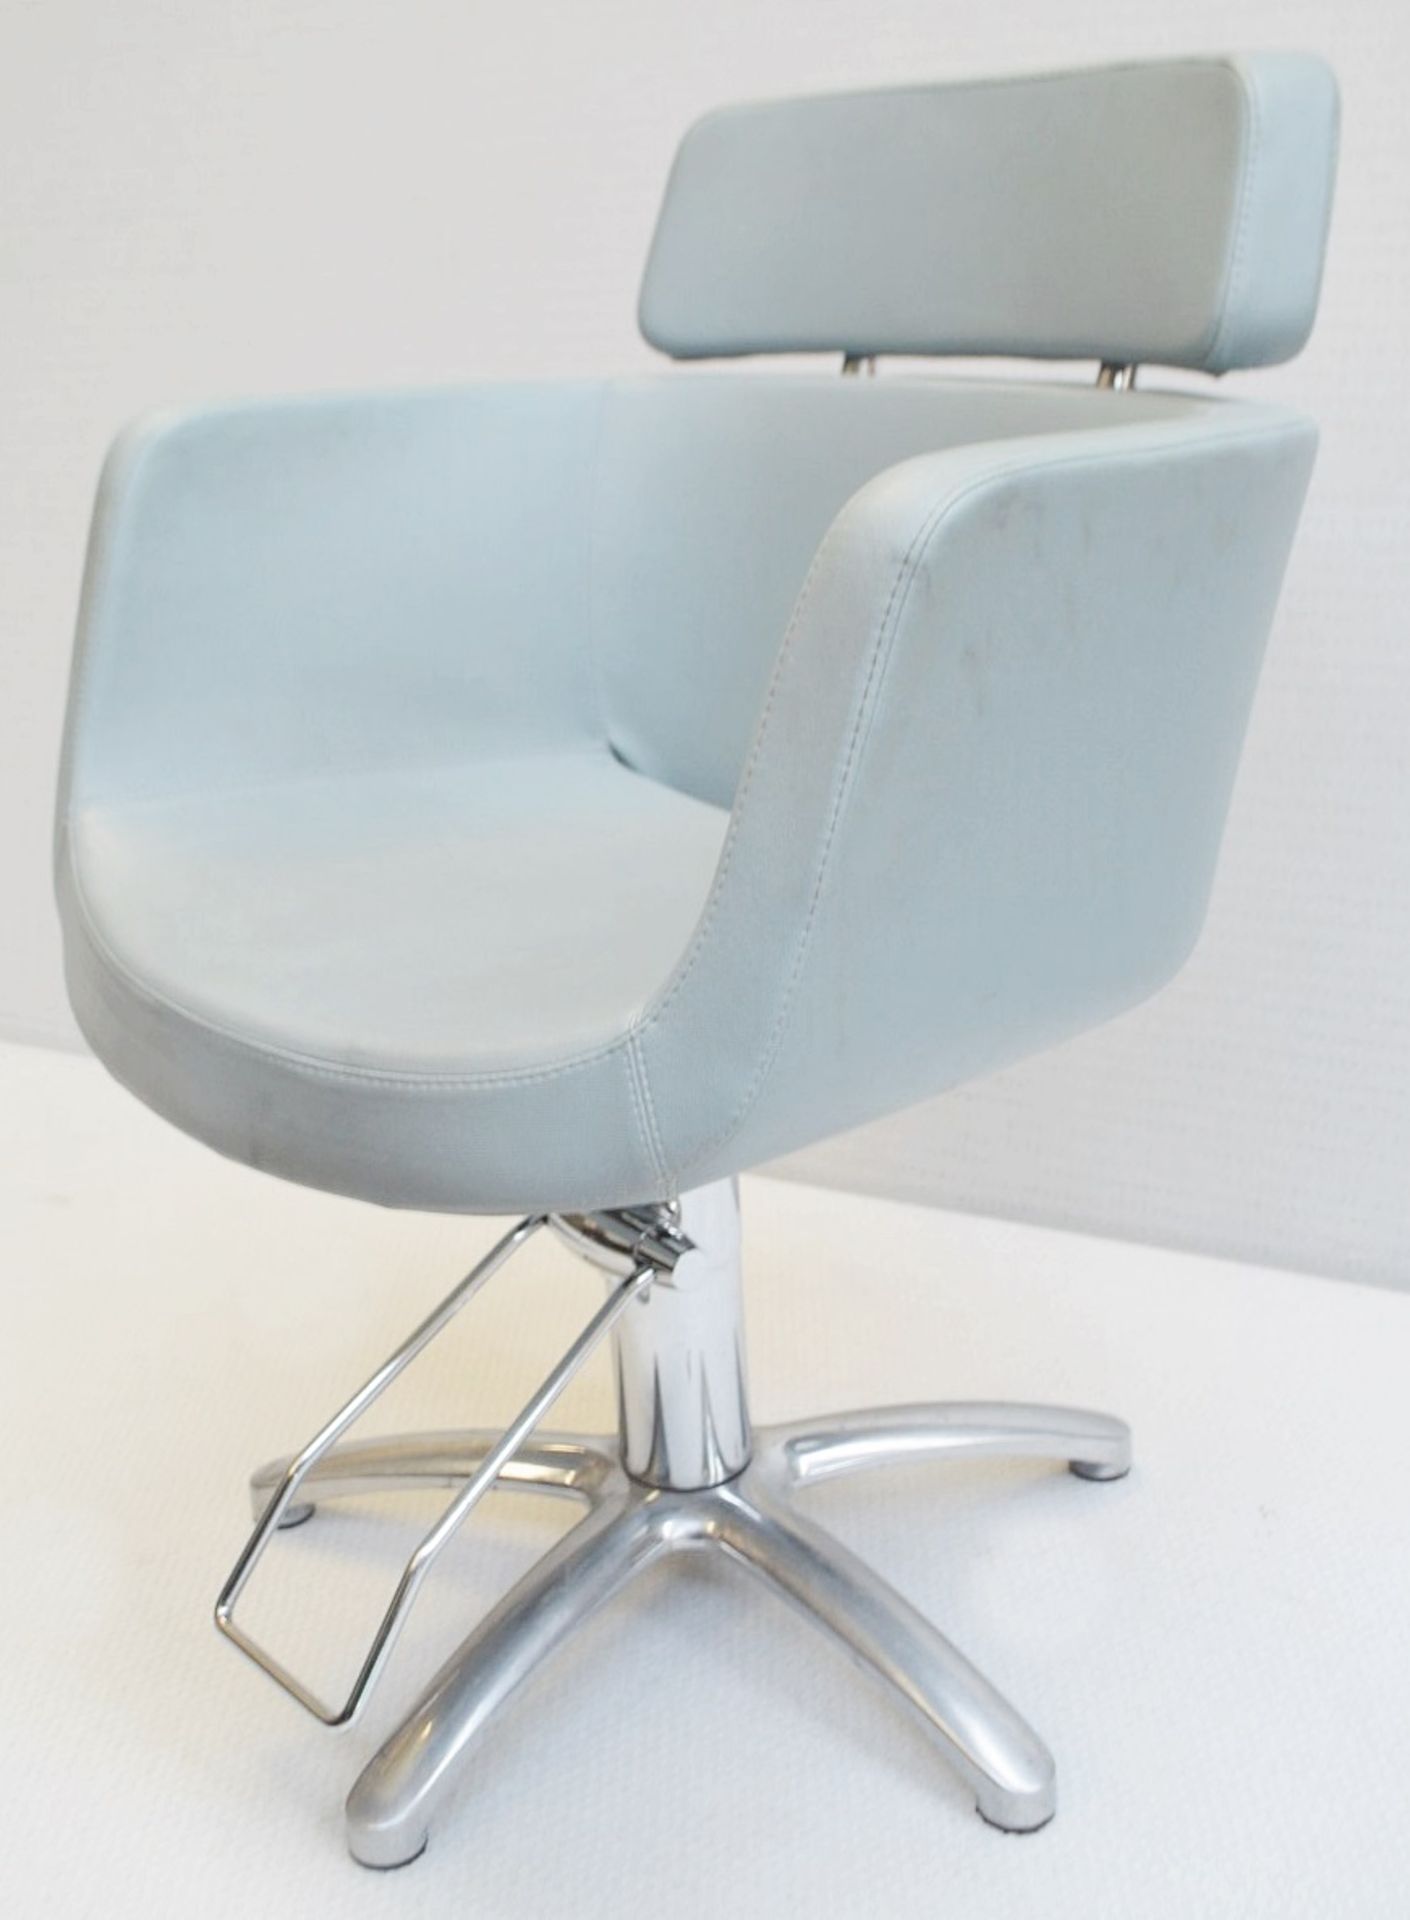 4 x Upholstered Swivel Treatment Chairs - Dimensions: W63 x D55 x H88cm, Seat 49cm - Ref: MHB101